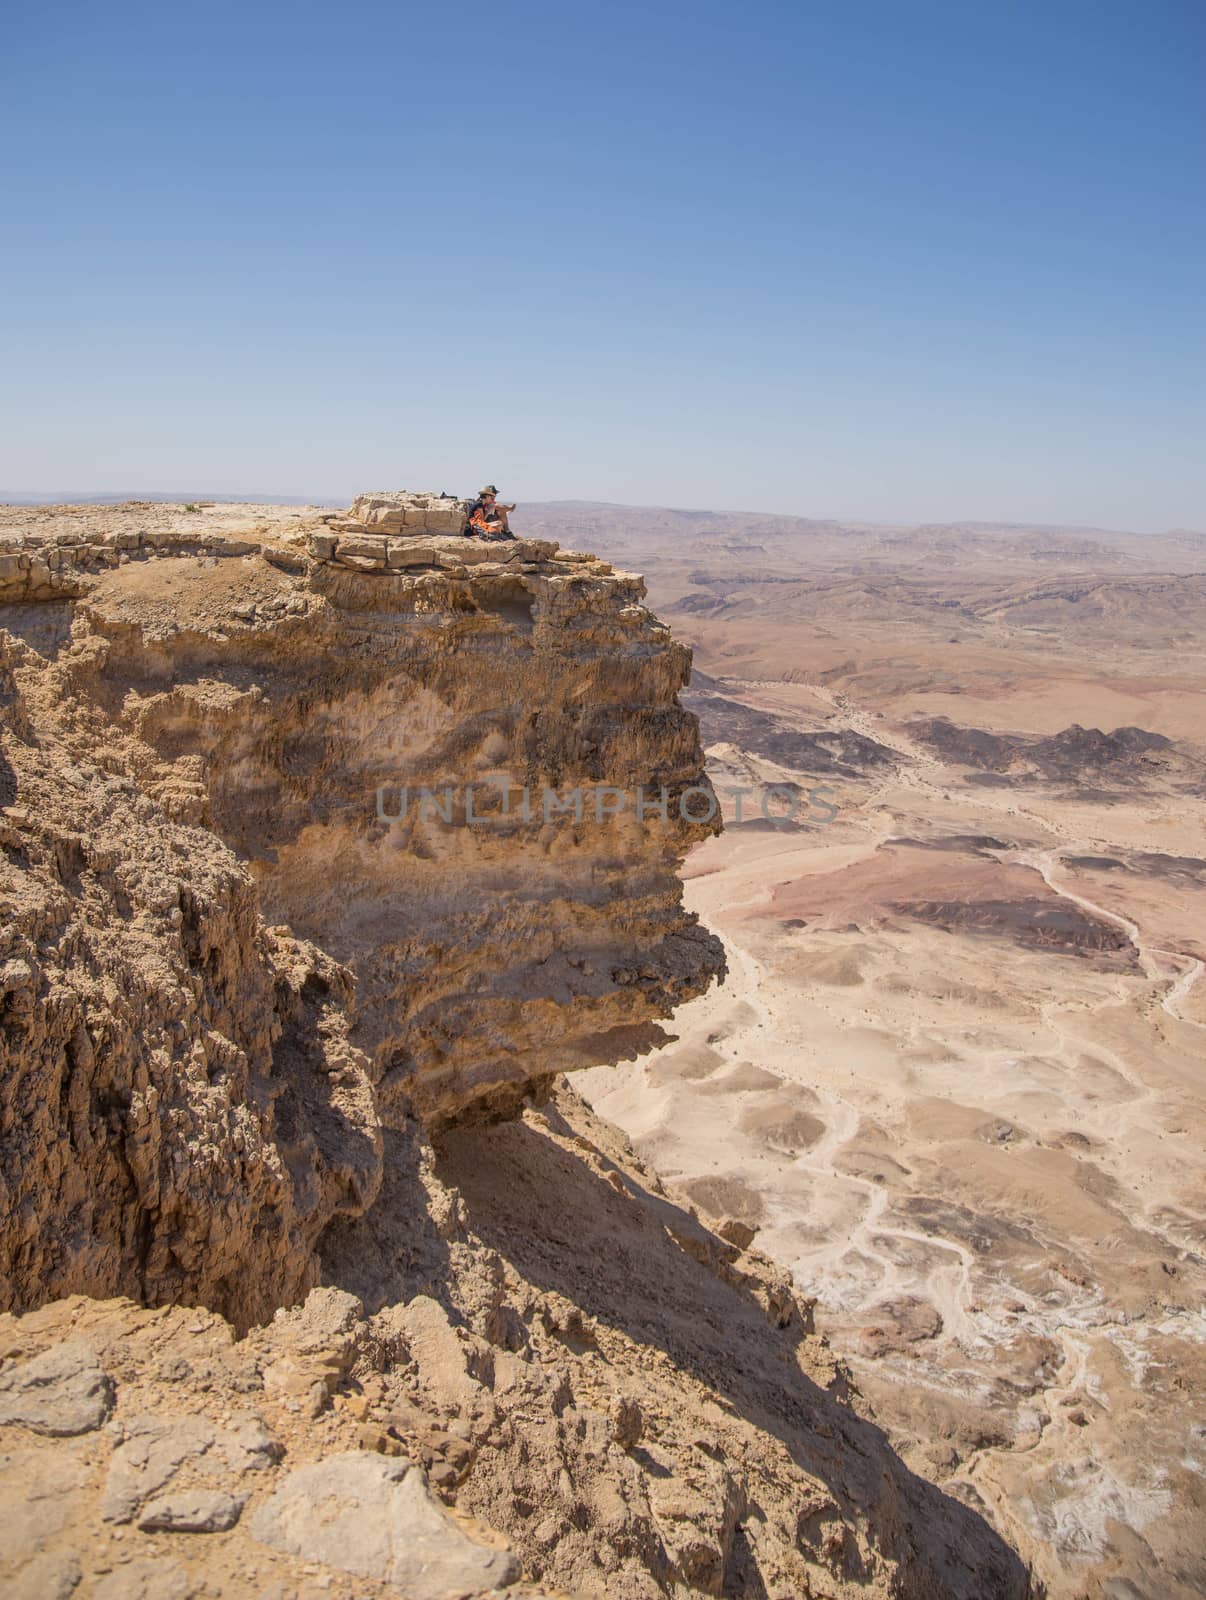 Hiking in stone desert mountain landscape of Israel